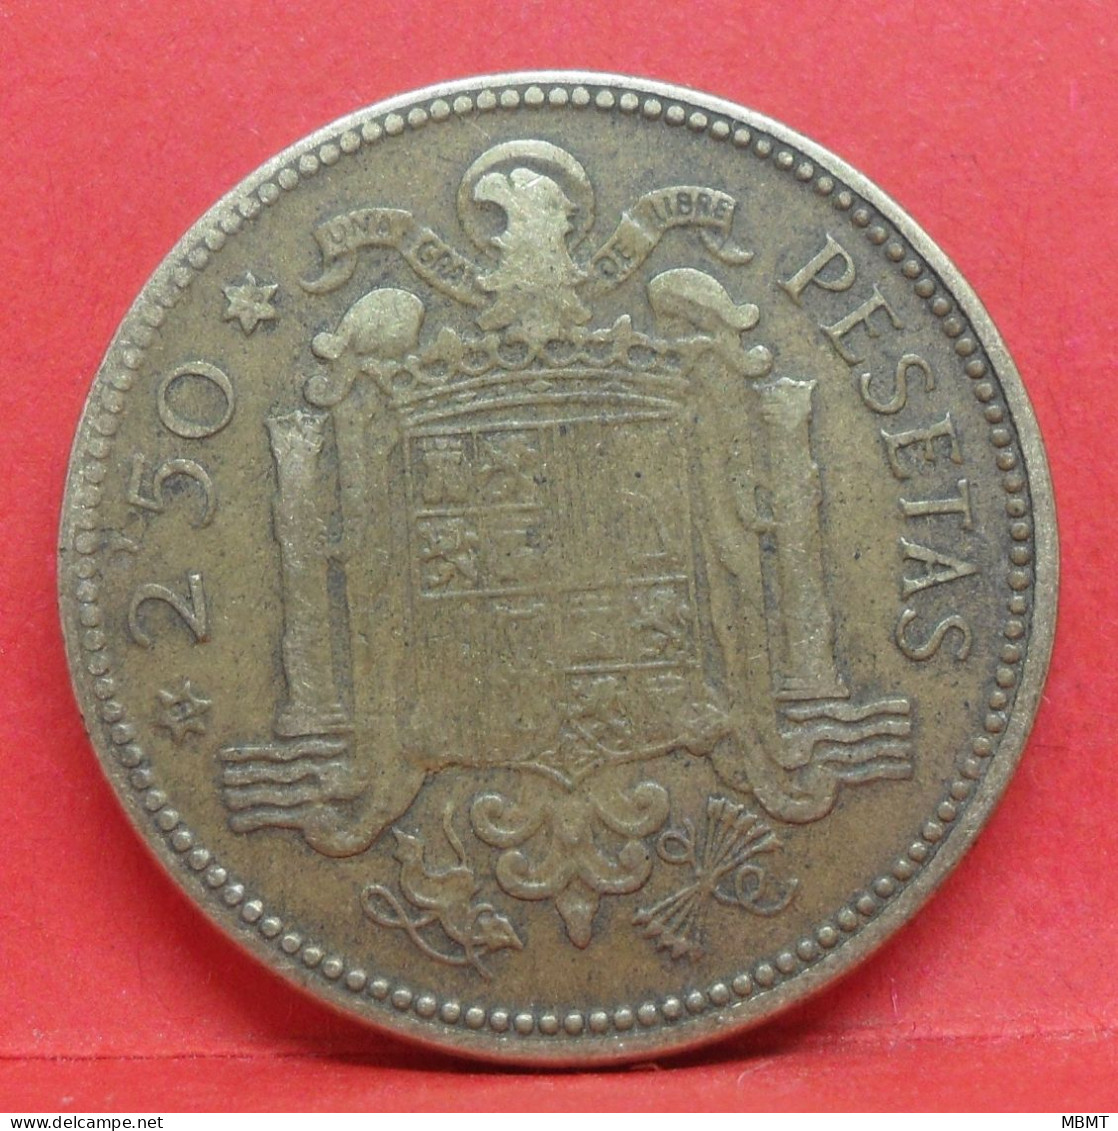 2.5 Pesetas 1953 étoile 56 - TB - Pièce Monnaie Espagne - Article N°2323 - 2 Pesetas